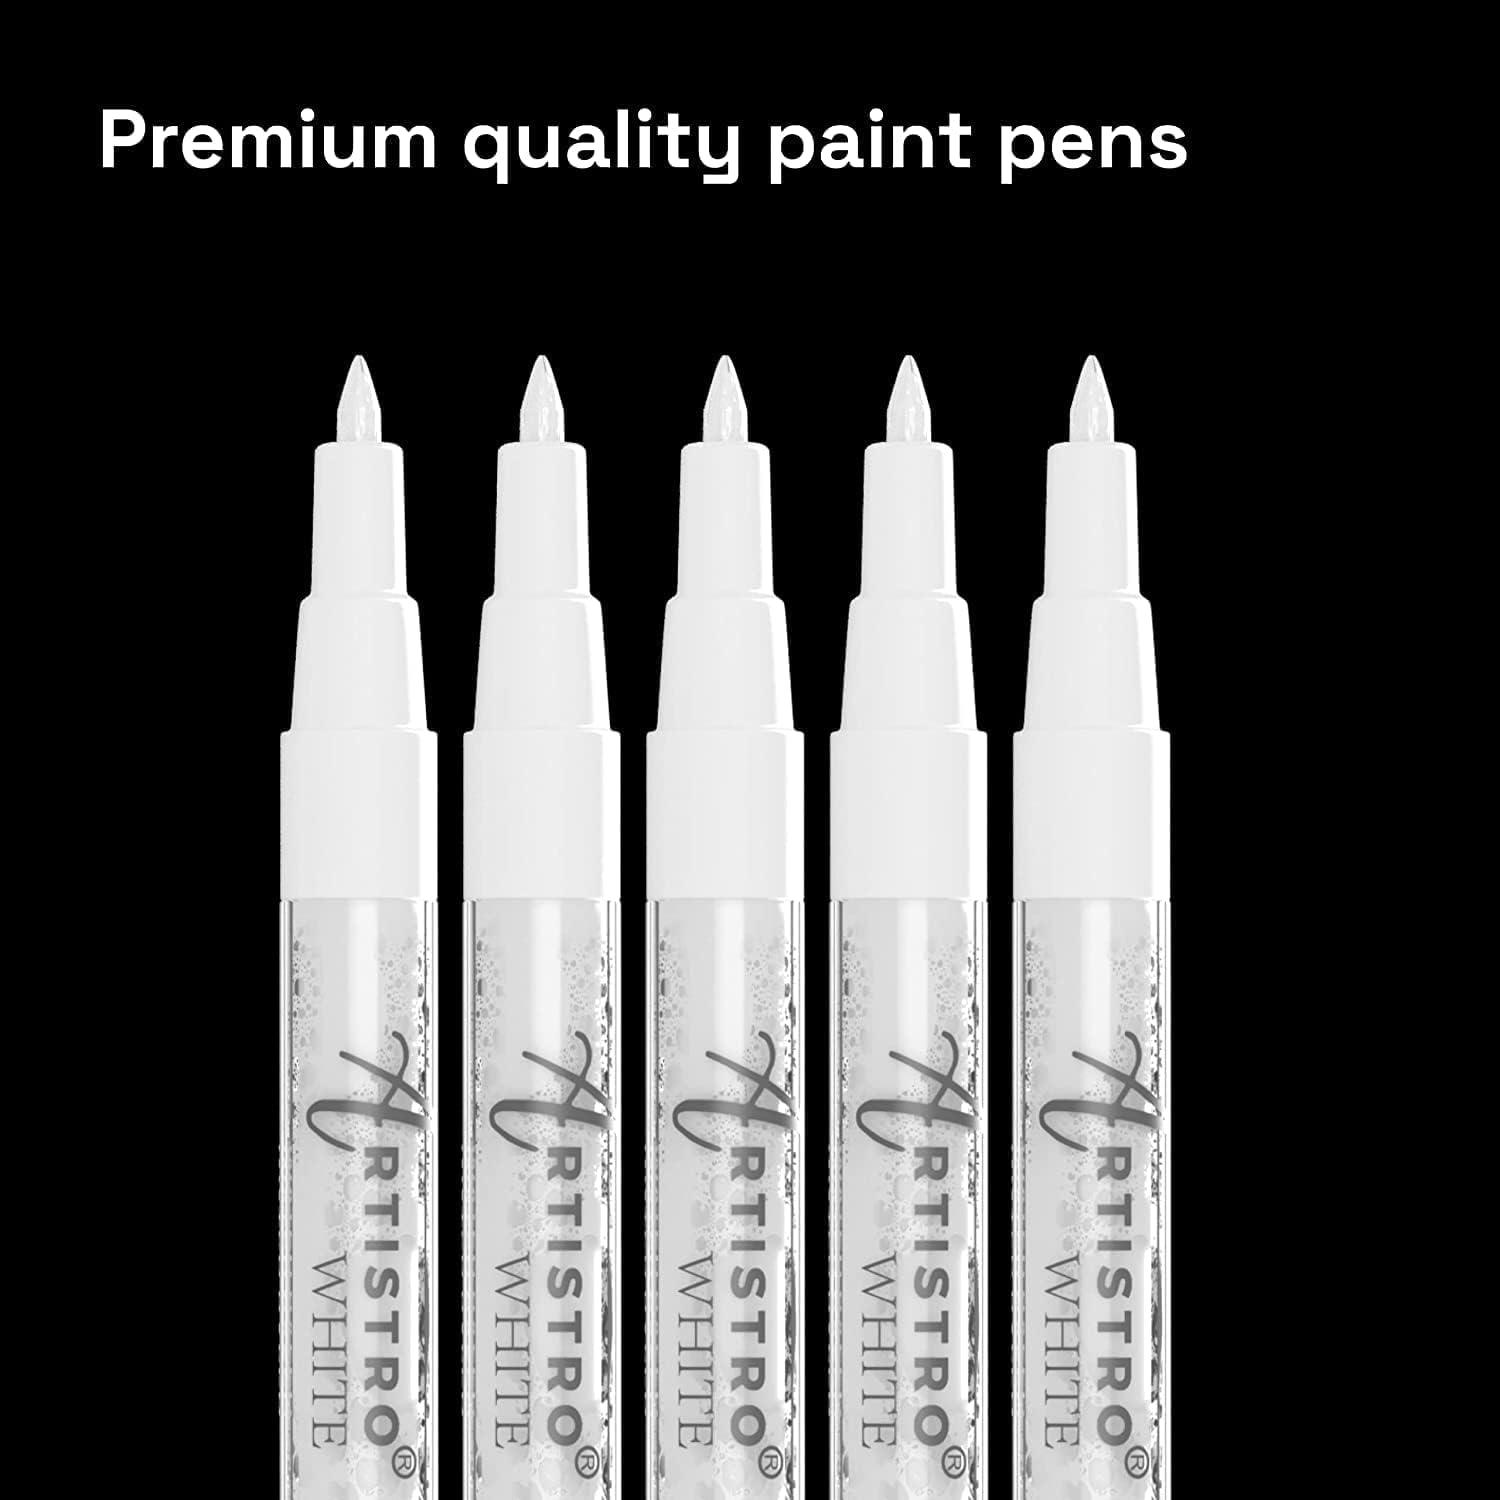 Artistro 30 Acrylic Paint Pens Extra Fine Tip, 30 Acrylic Paint Pens